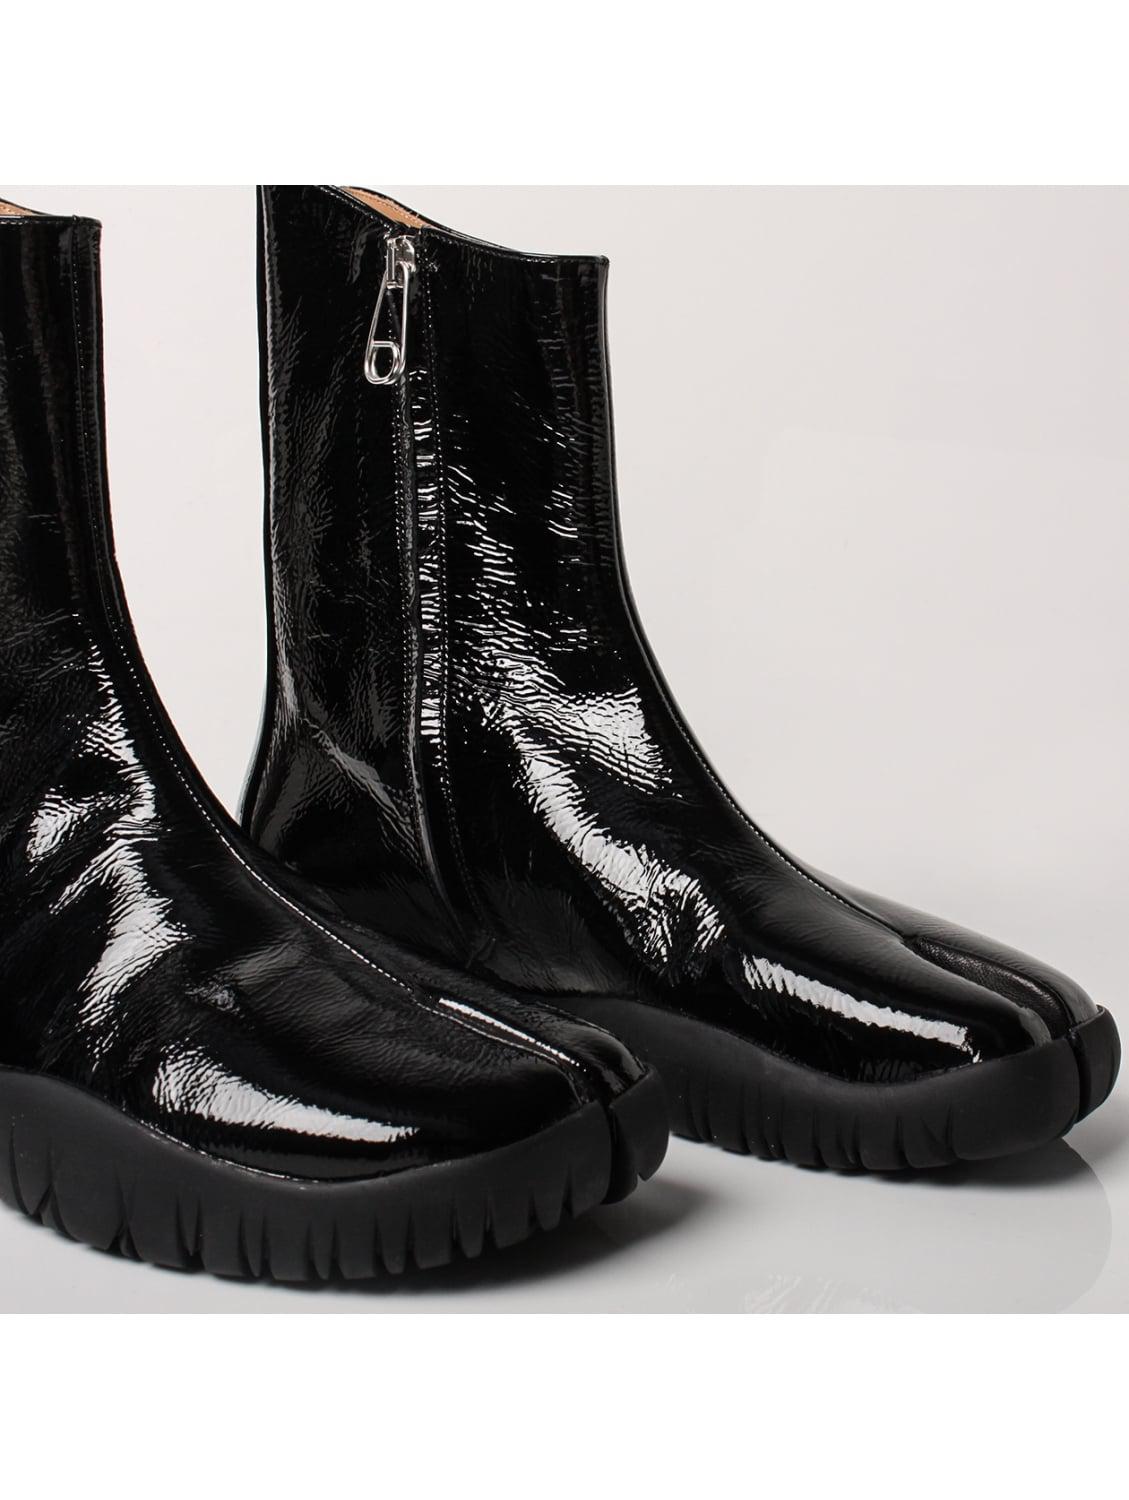 Maison Margiela Tabi Patent Leather Boot Black - Lyst